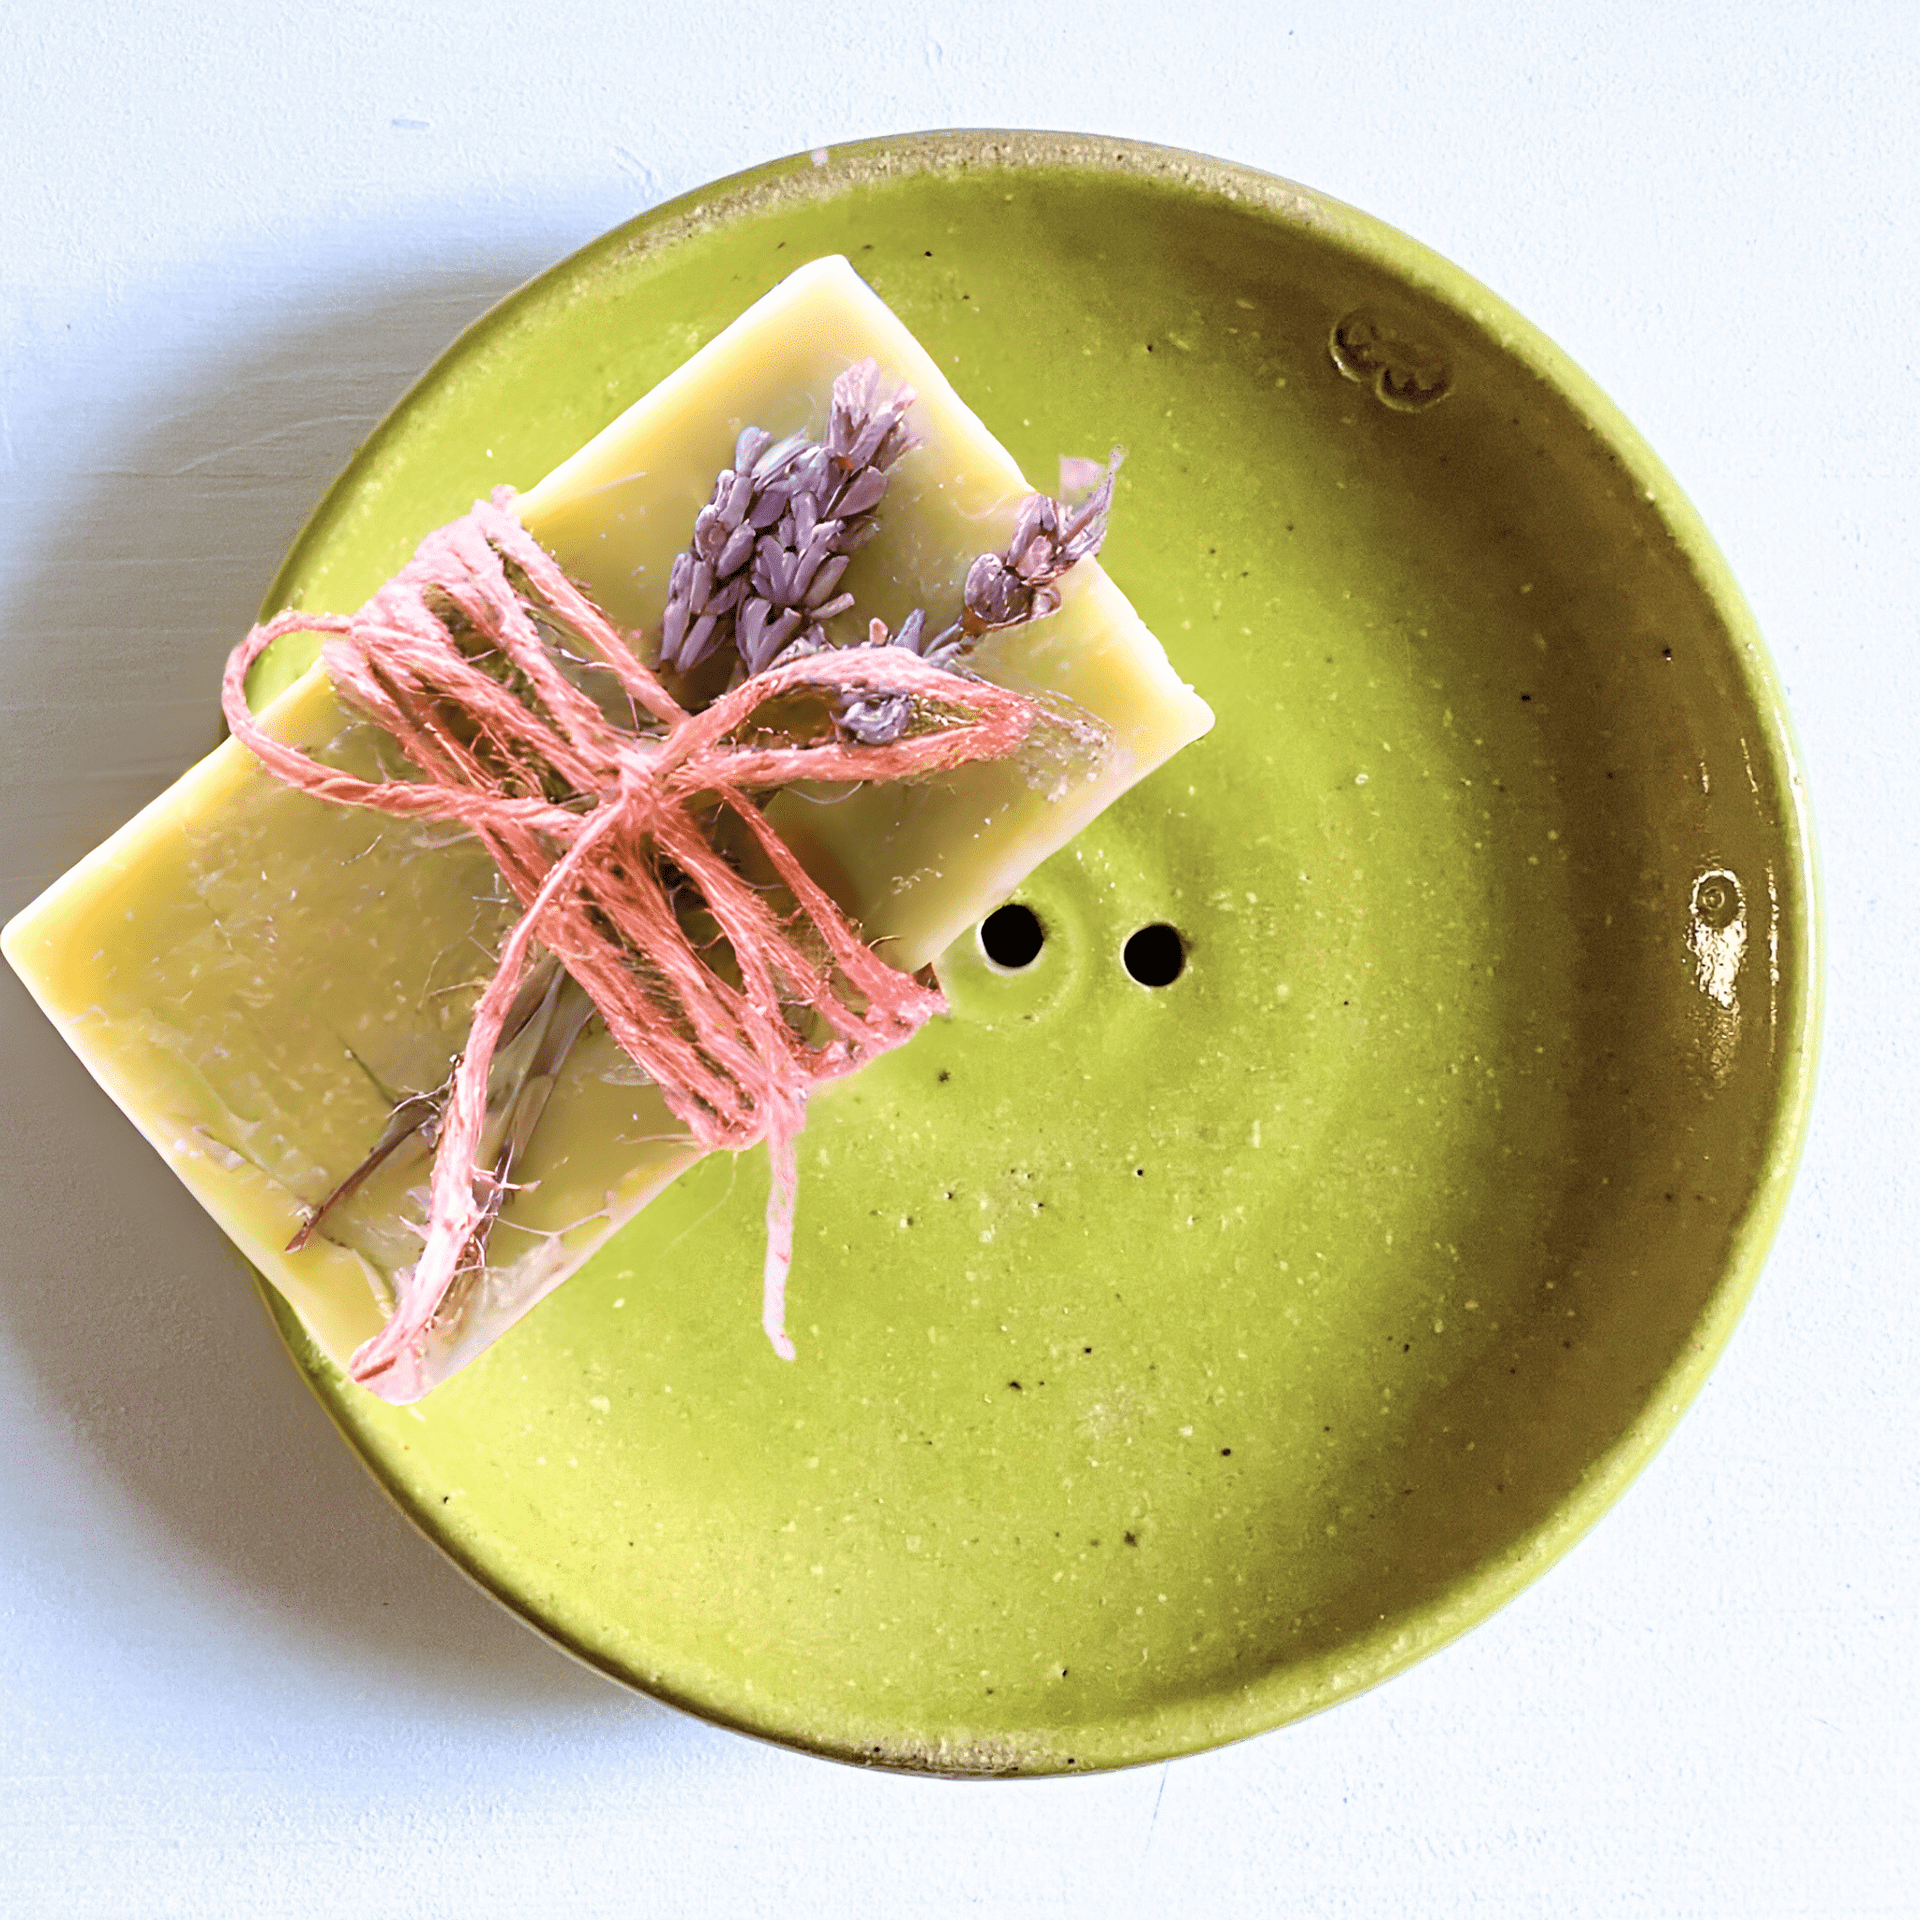 LungMongKol Shop Ceramic Soap Dish with Self Draining Tray for Bar Soap, Bathroom, Kitchen (Lemon Yellow)